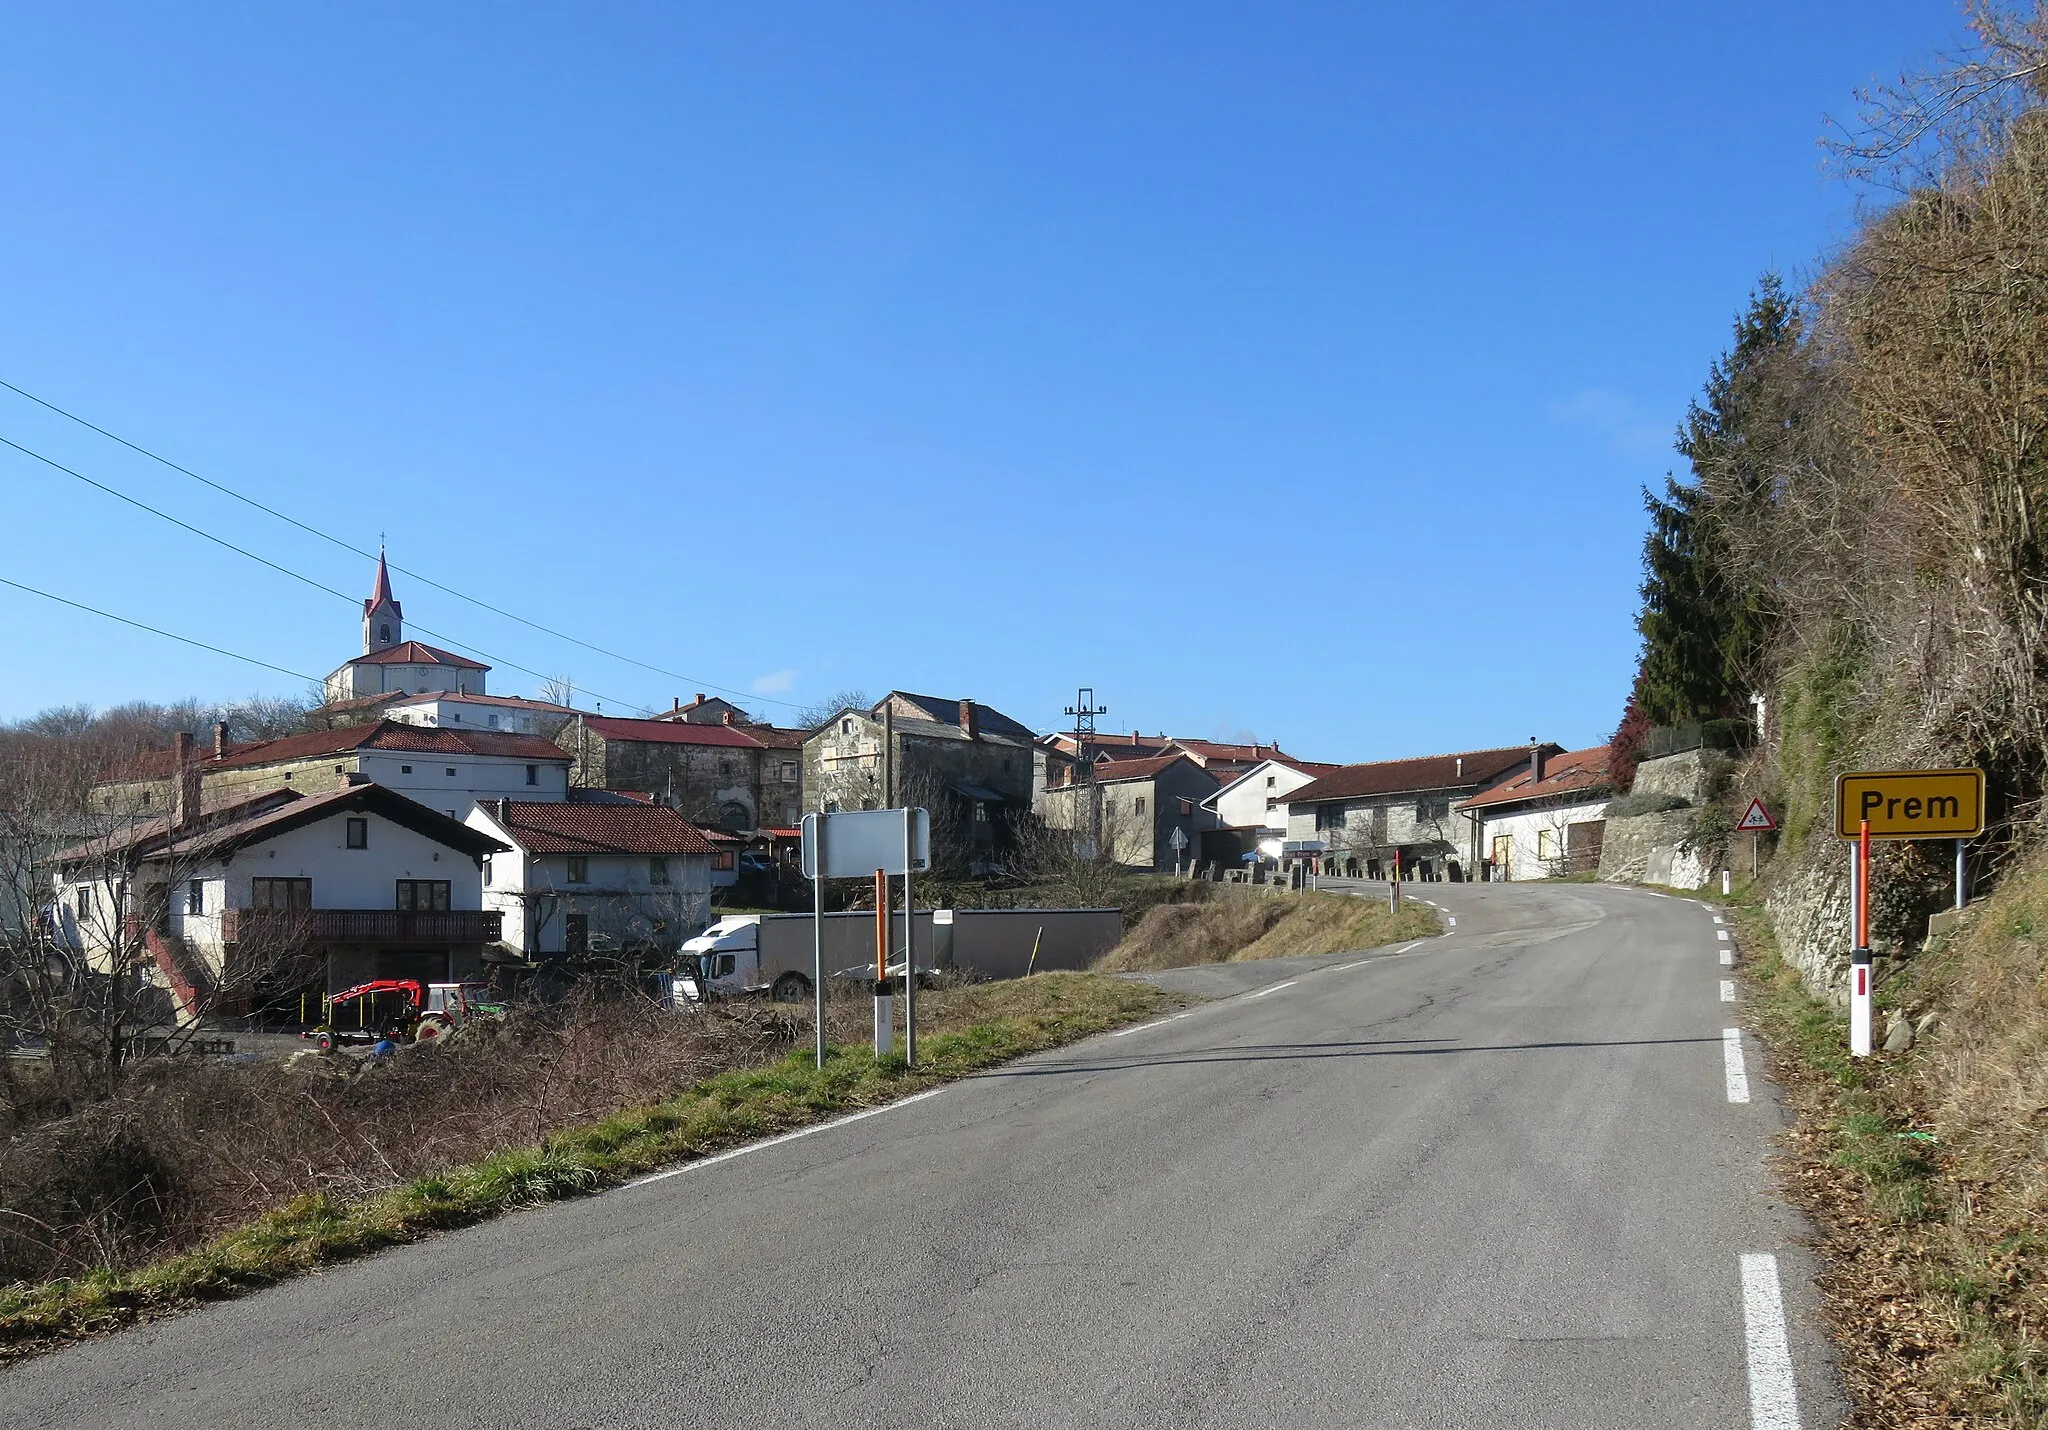 Photo showing: Prem, Municipality of Ilirska Bistrica, Slovenia